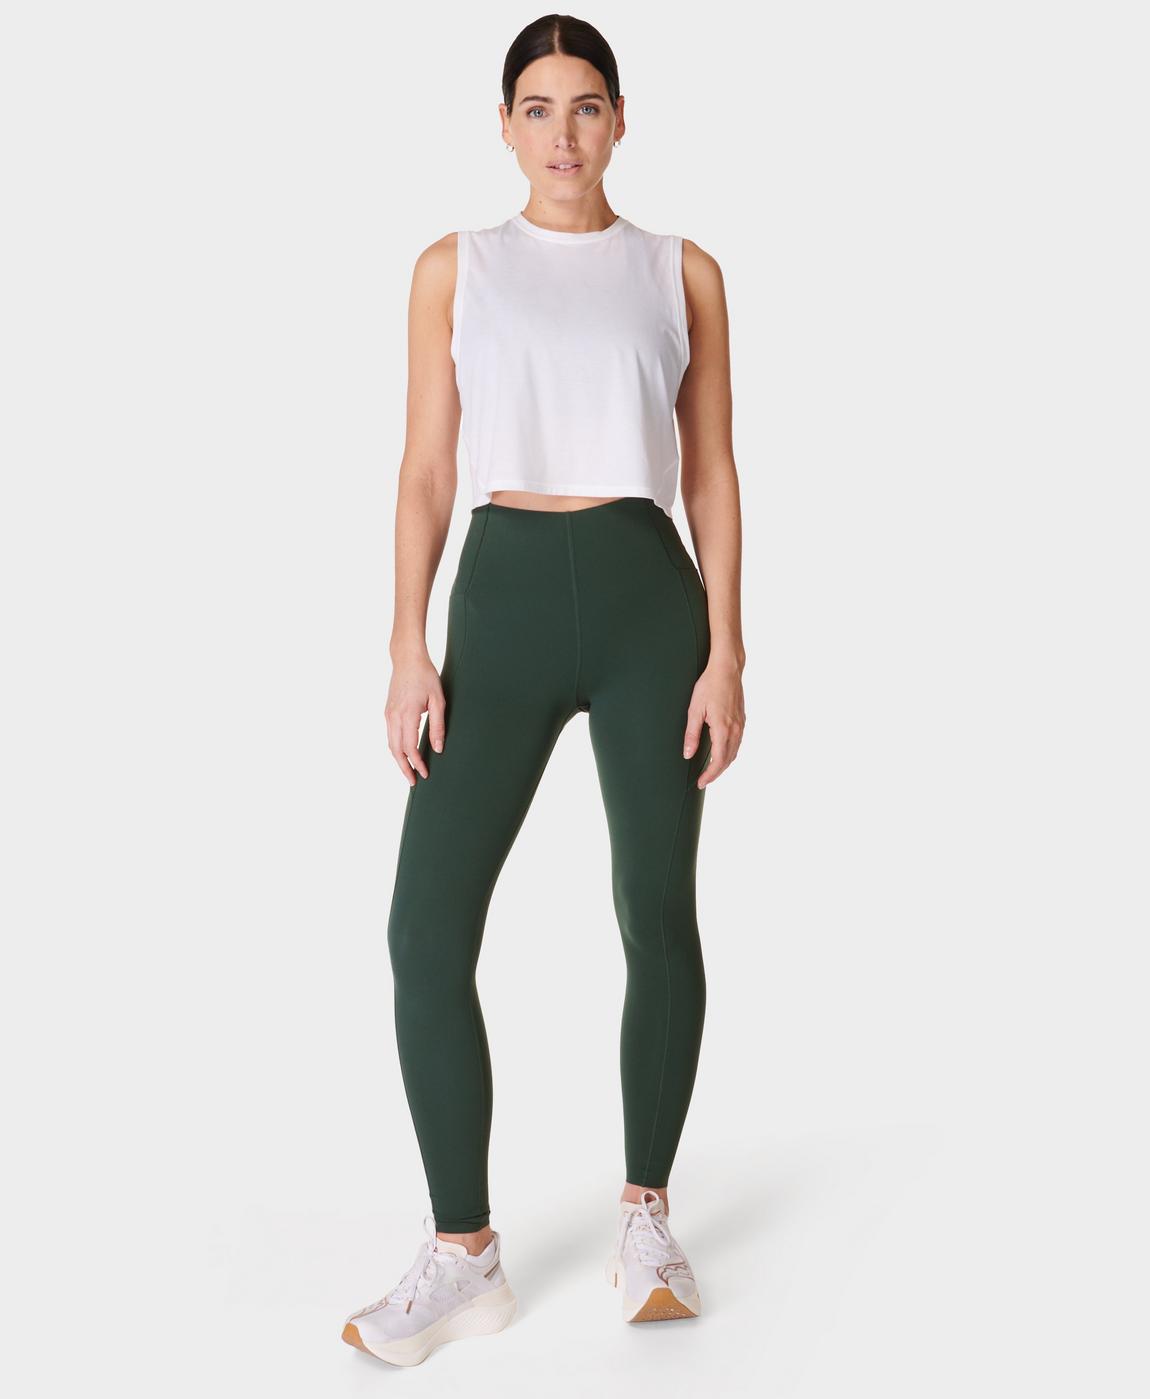 Power UltraSculpt High-Waisted Workout Leggings - Trek Green, Women's  Leggings